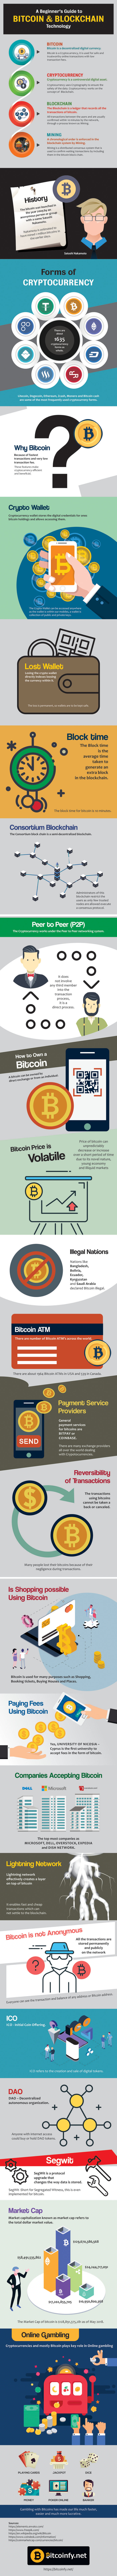 Bitcoin-Infographic final